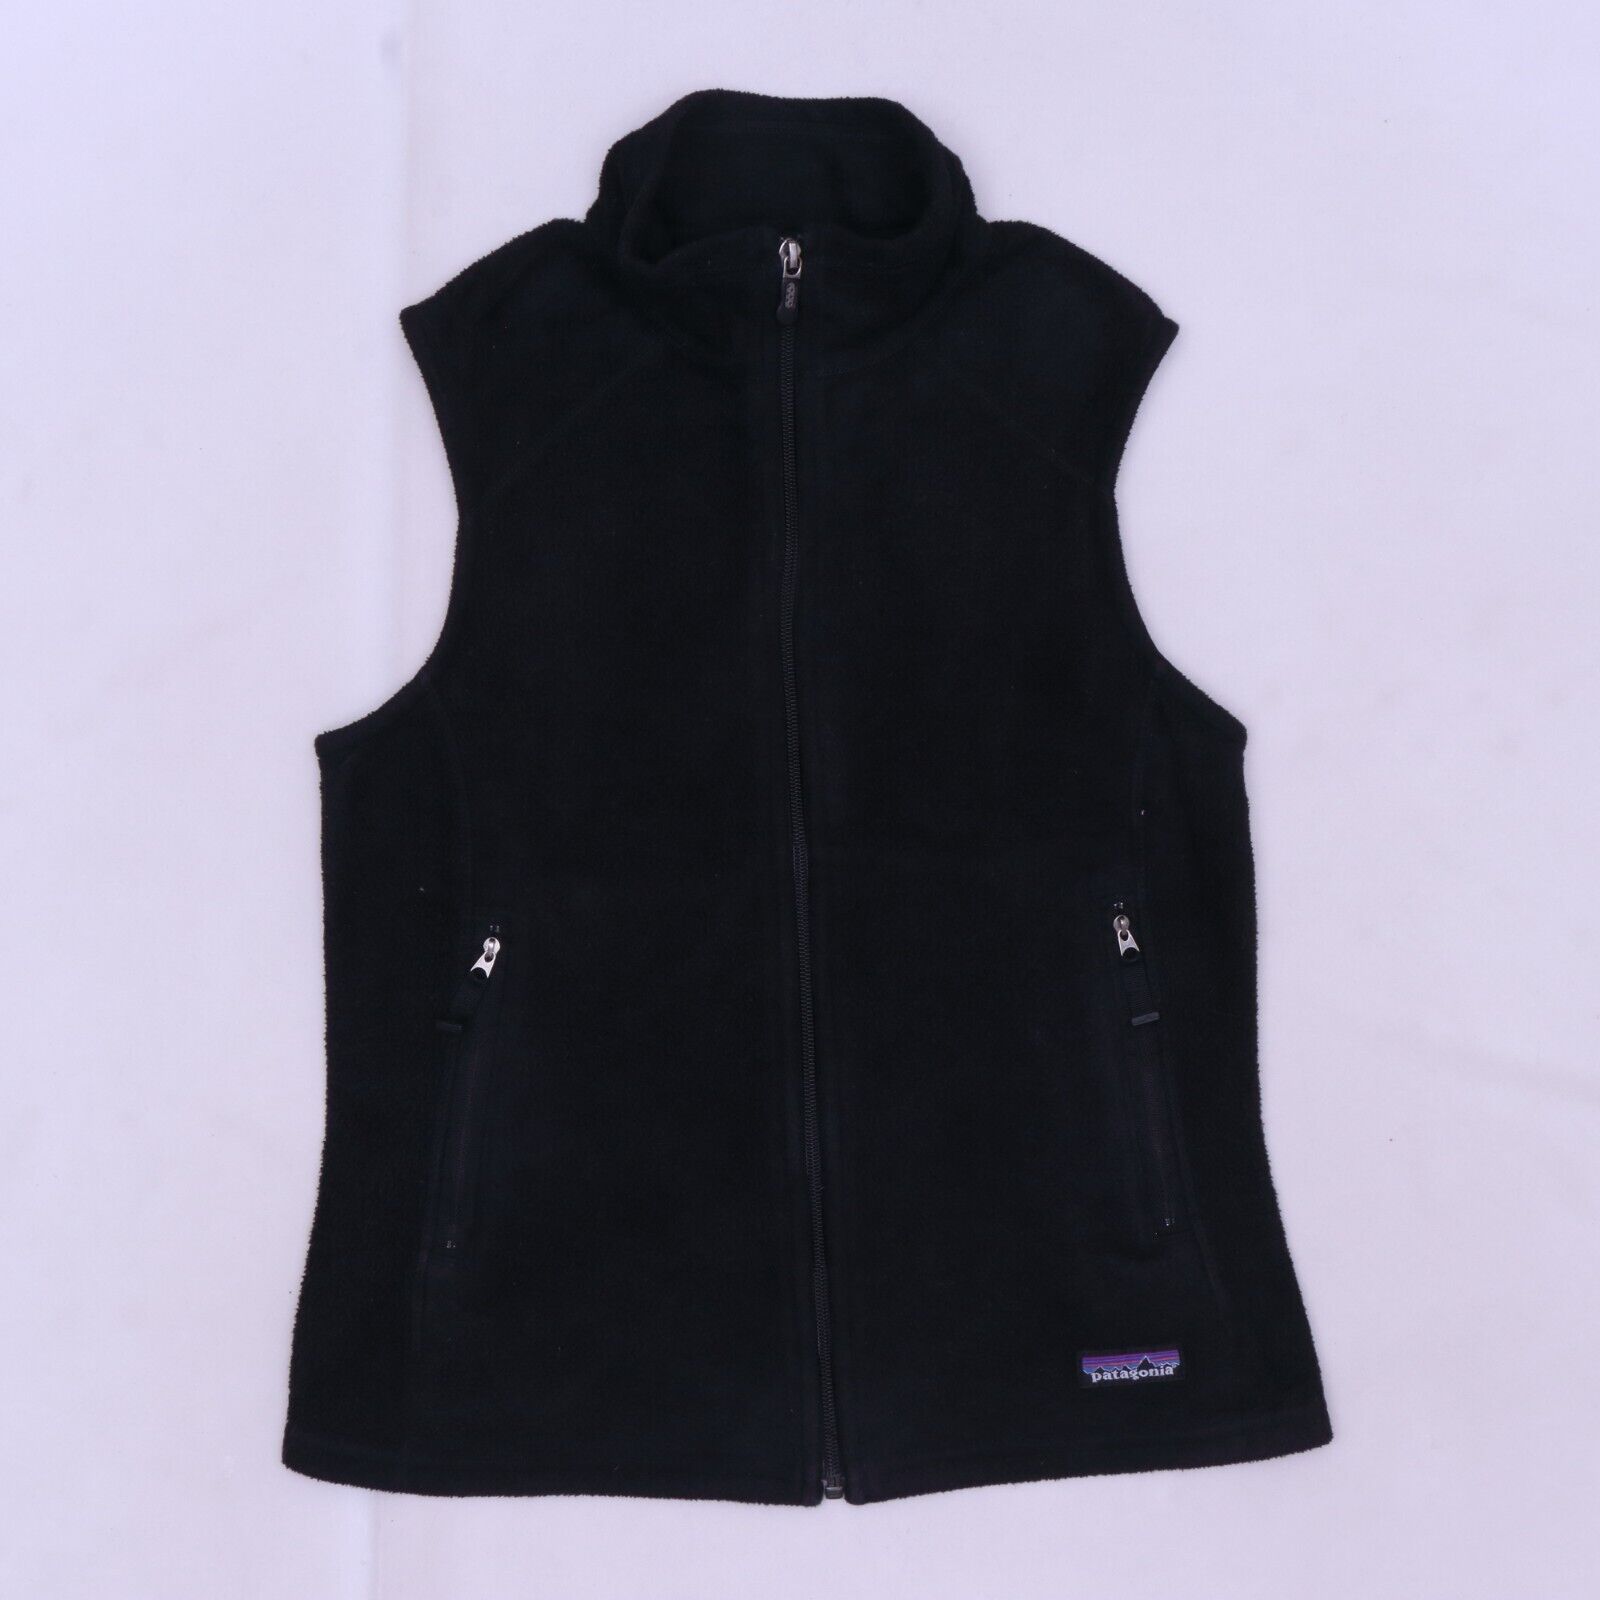 C4742 VTG Patagonia Synchilla Fleece Women's Polartec Vest Size S